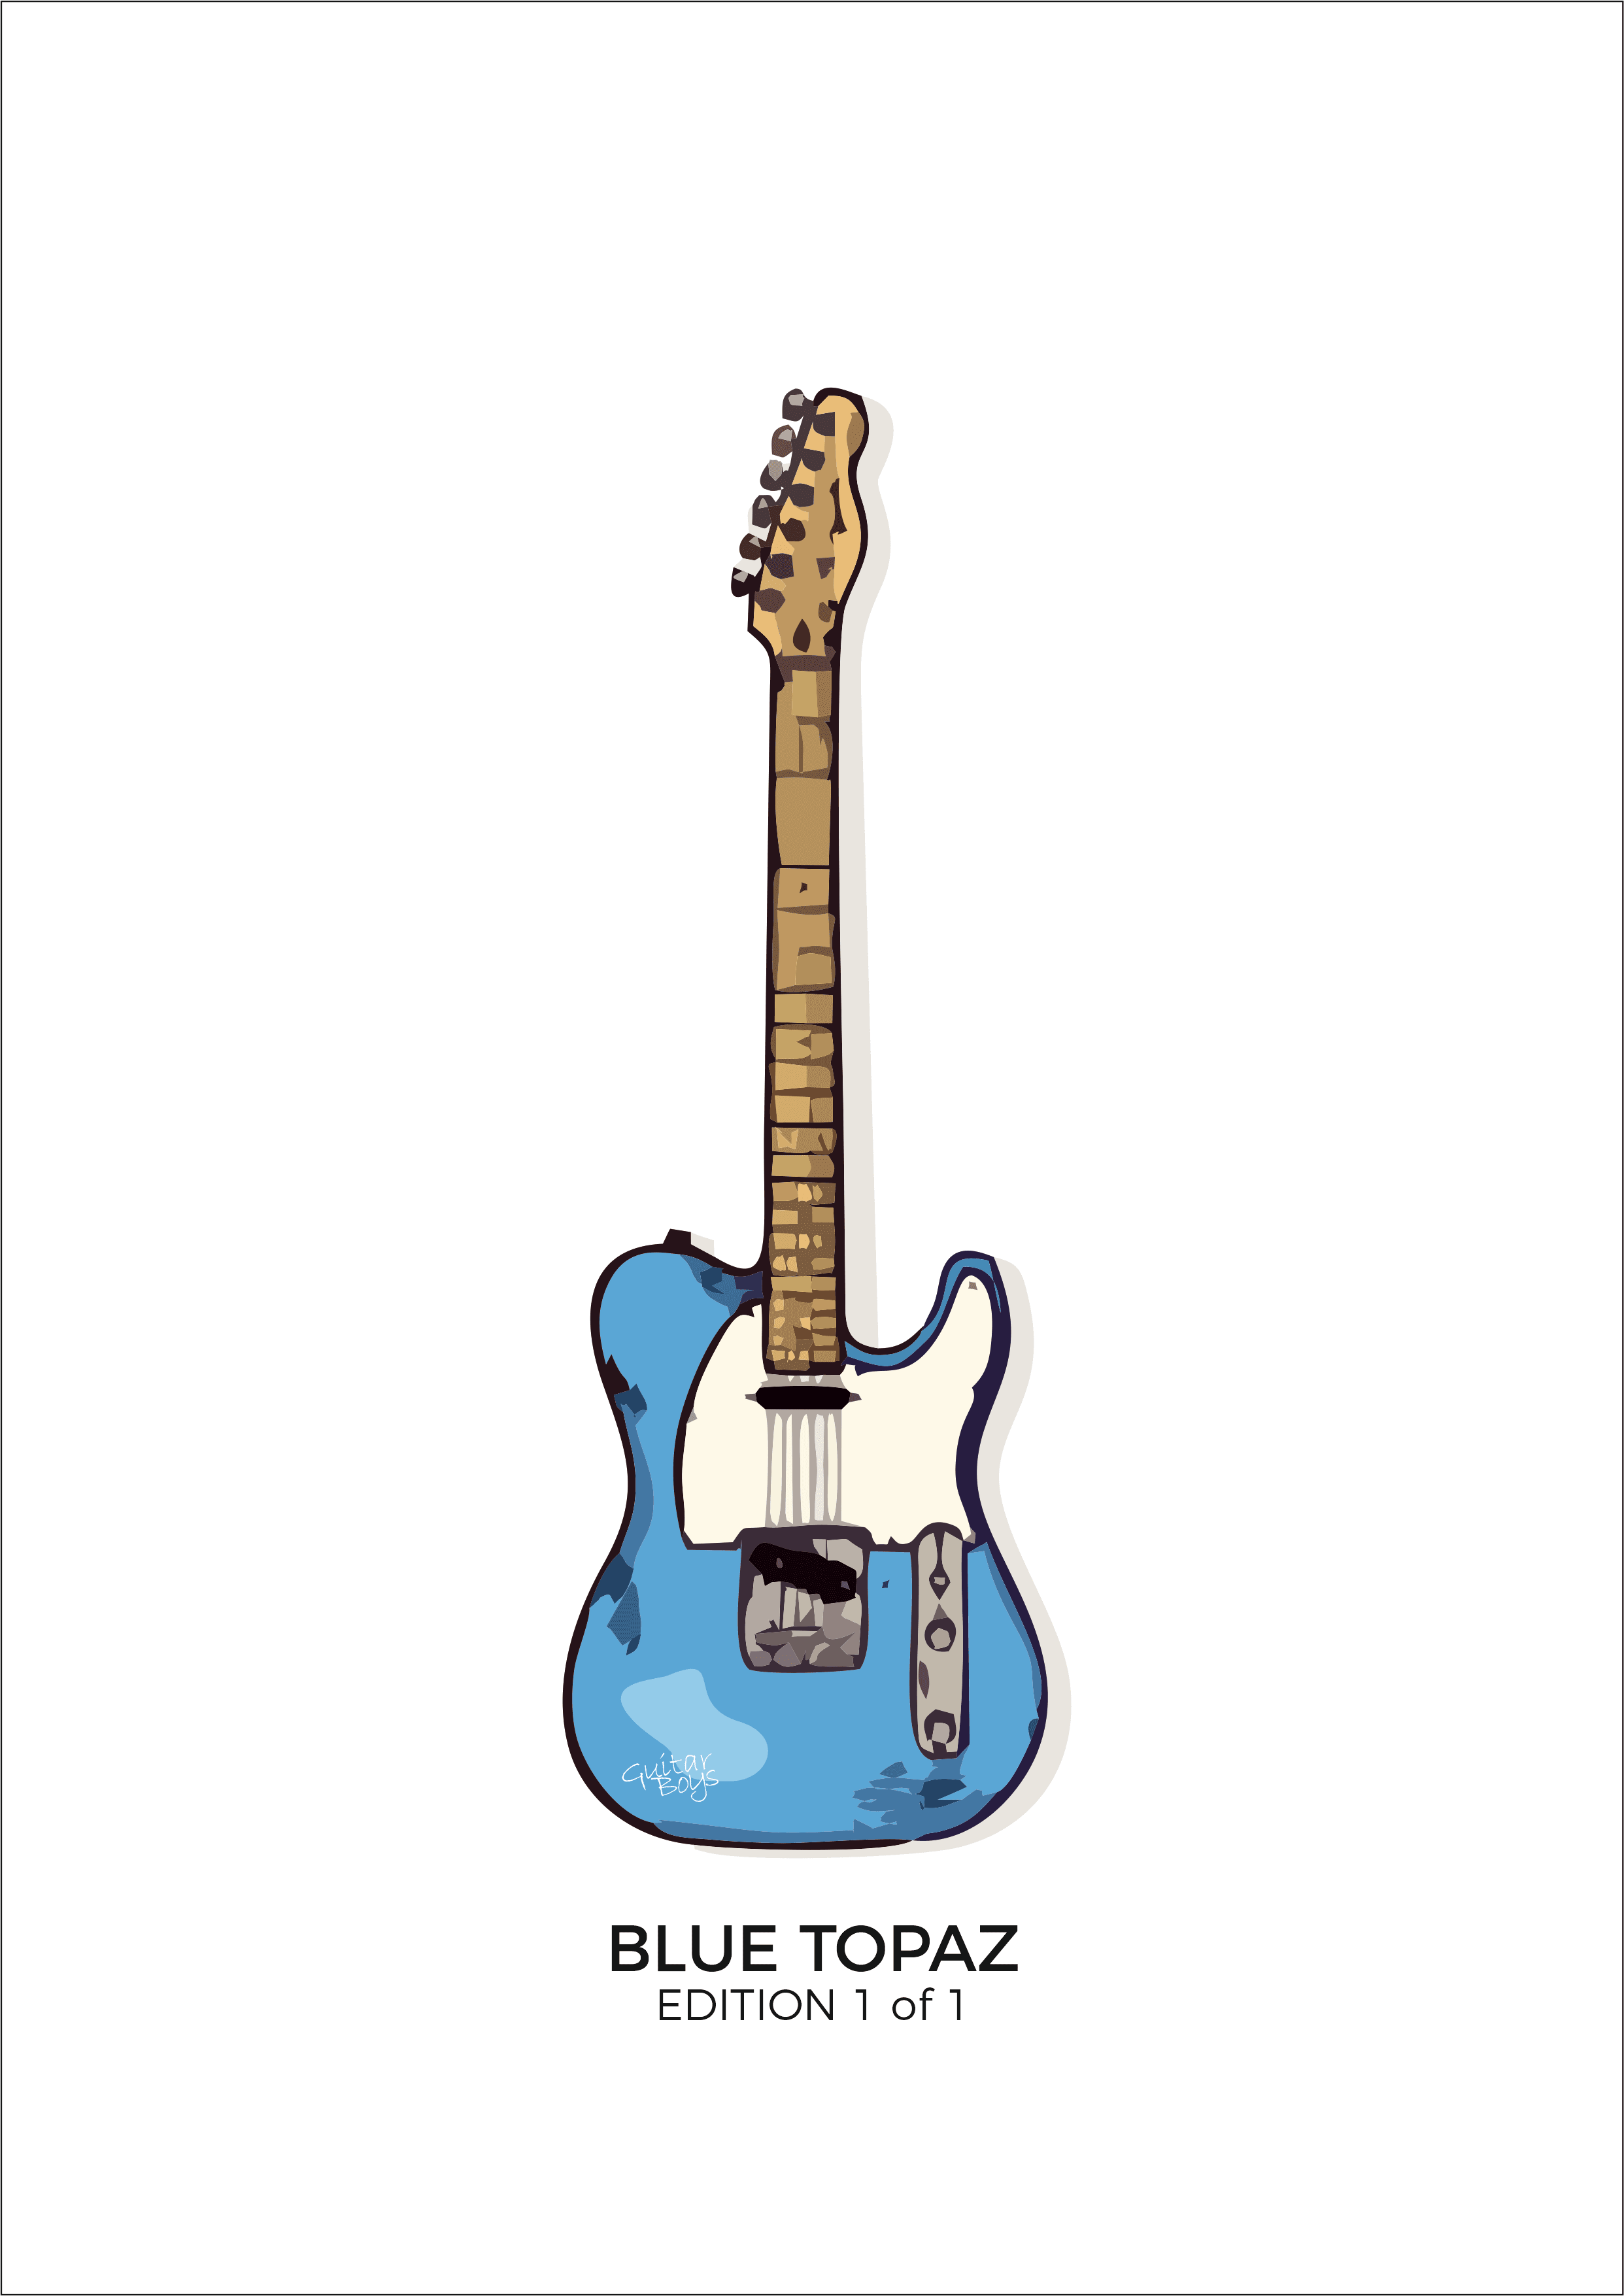 BLUE TOPAZ - Edition 1 of 1 - Art by Guitar Boys // 2021